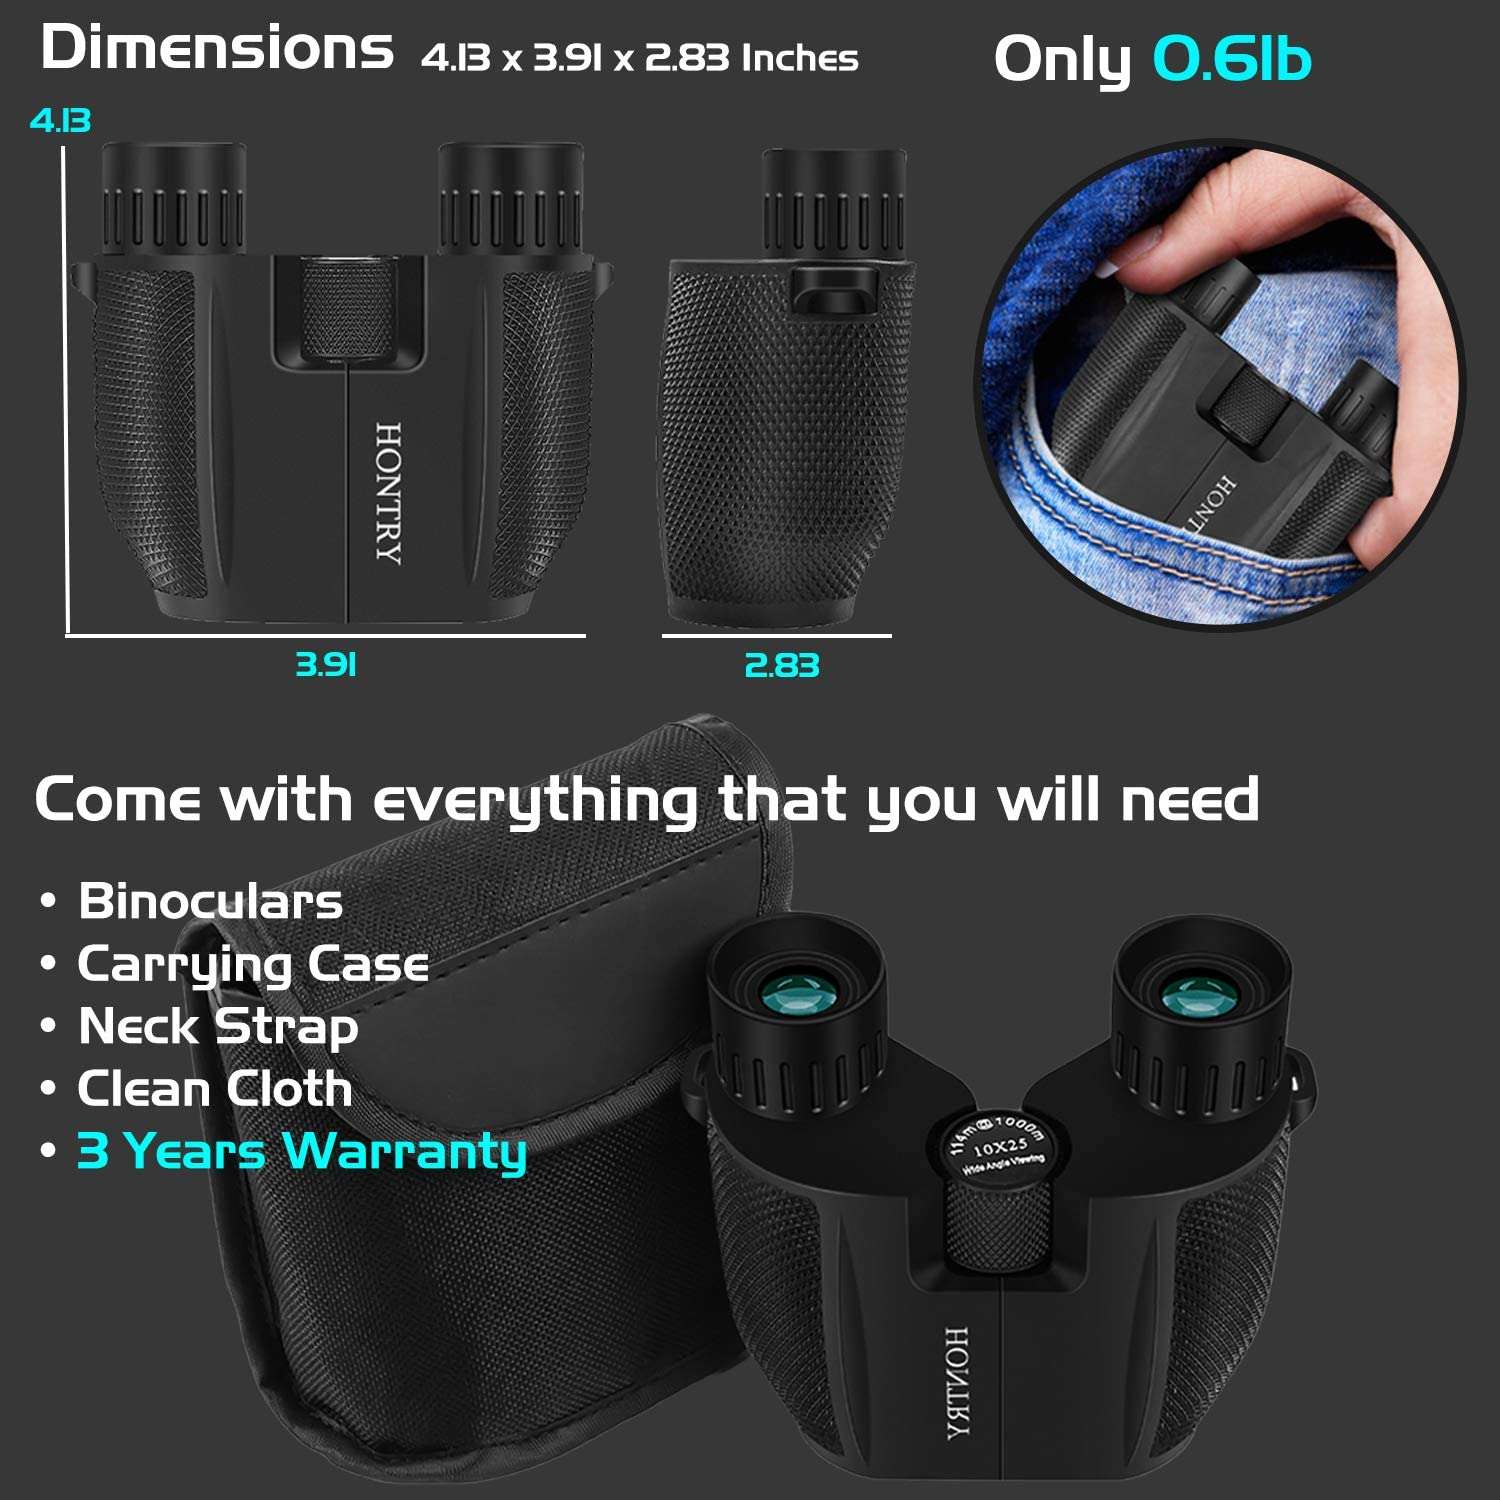 Hontry Compact Binoculars